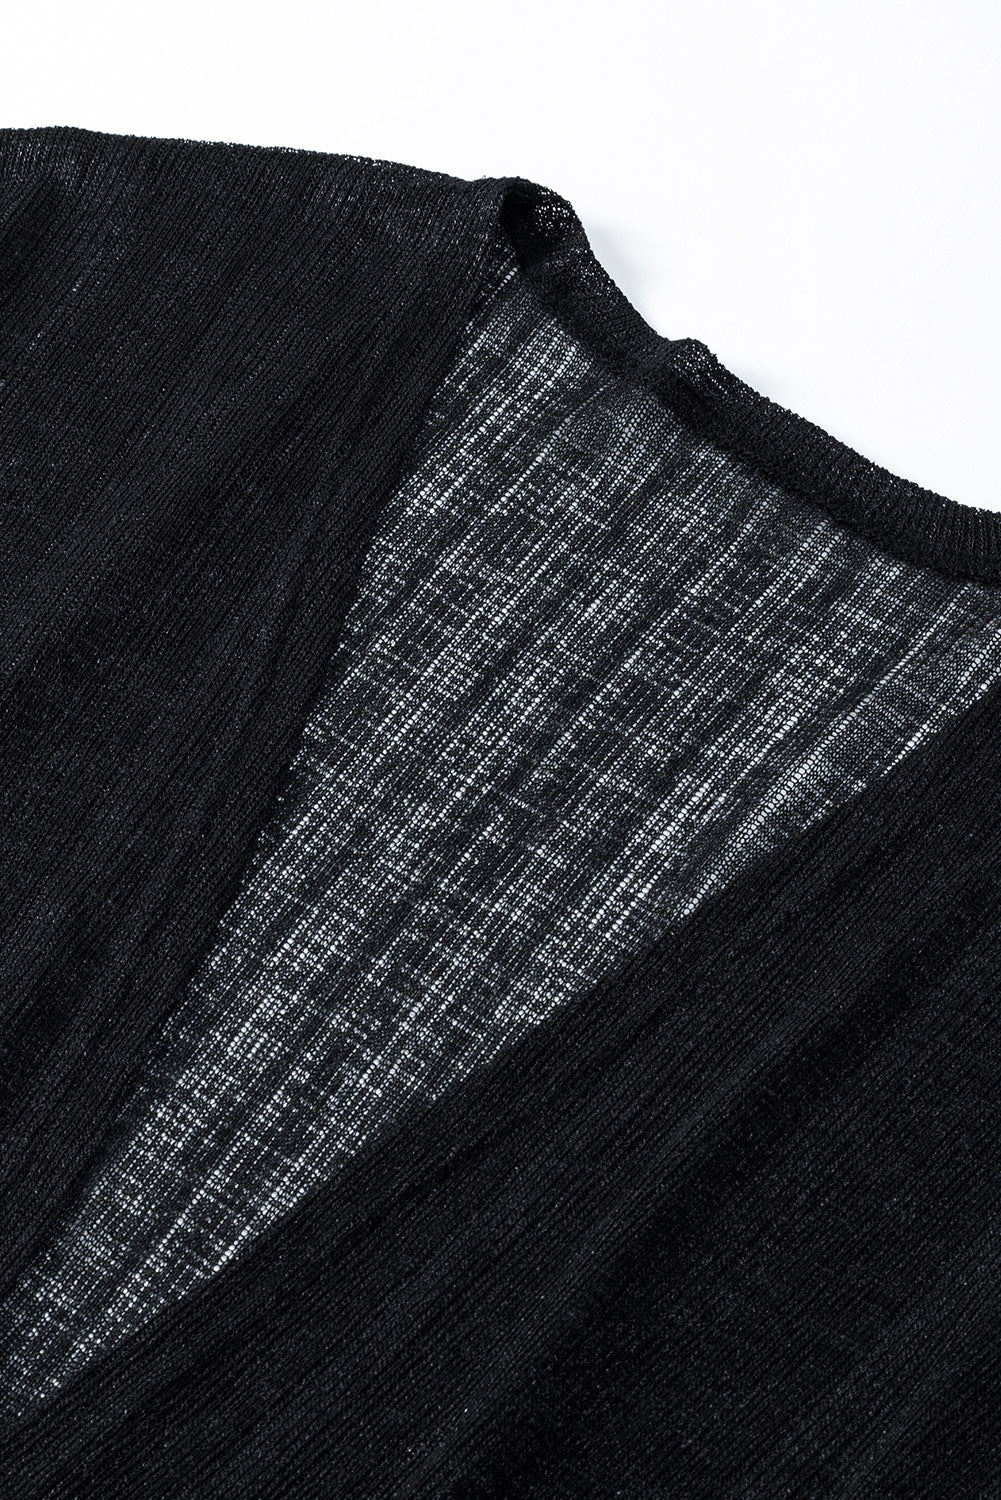 Black Sheer Lightweight Knit Long Sleeve Cardigan